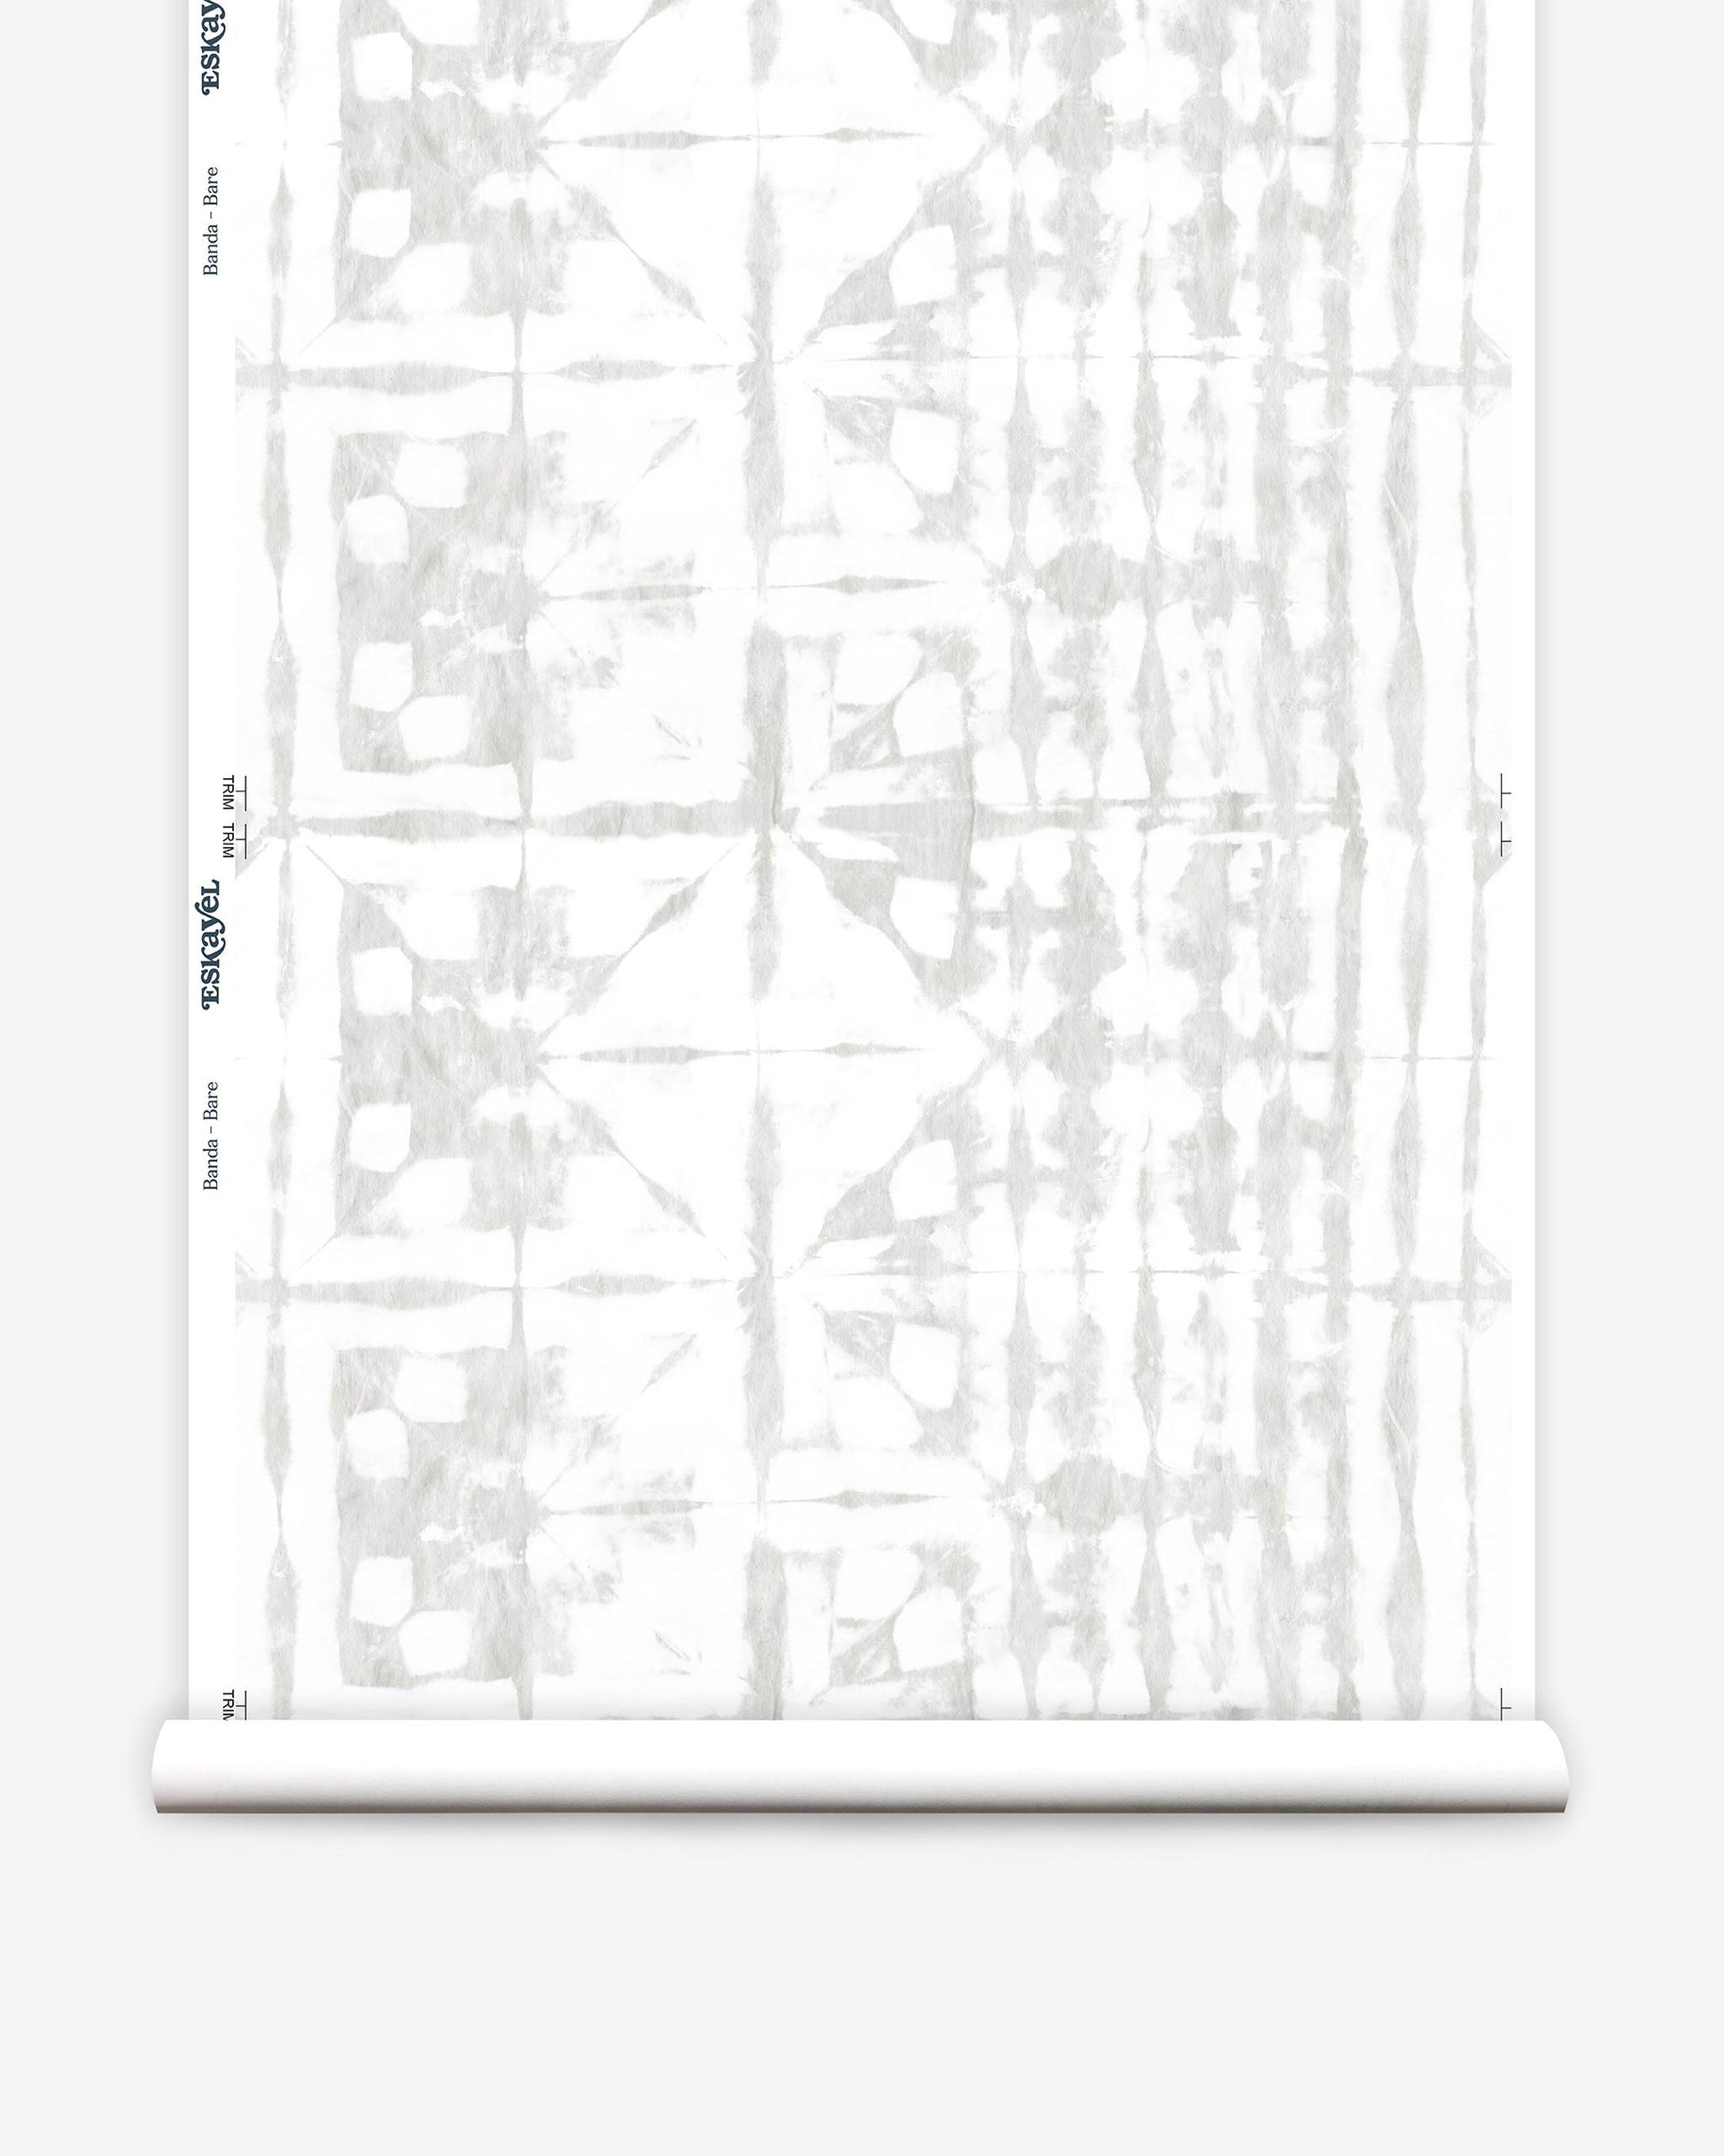 Vincent Sélection - PRINTED LOG BOX WITH WINDOW - 6 X 6 X 15 '' (BLACK)